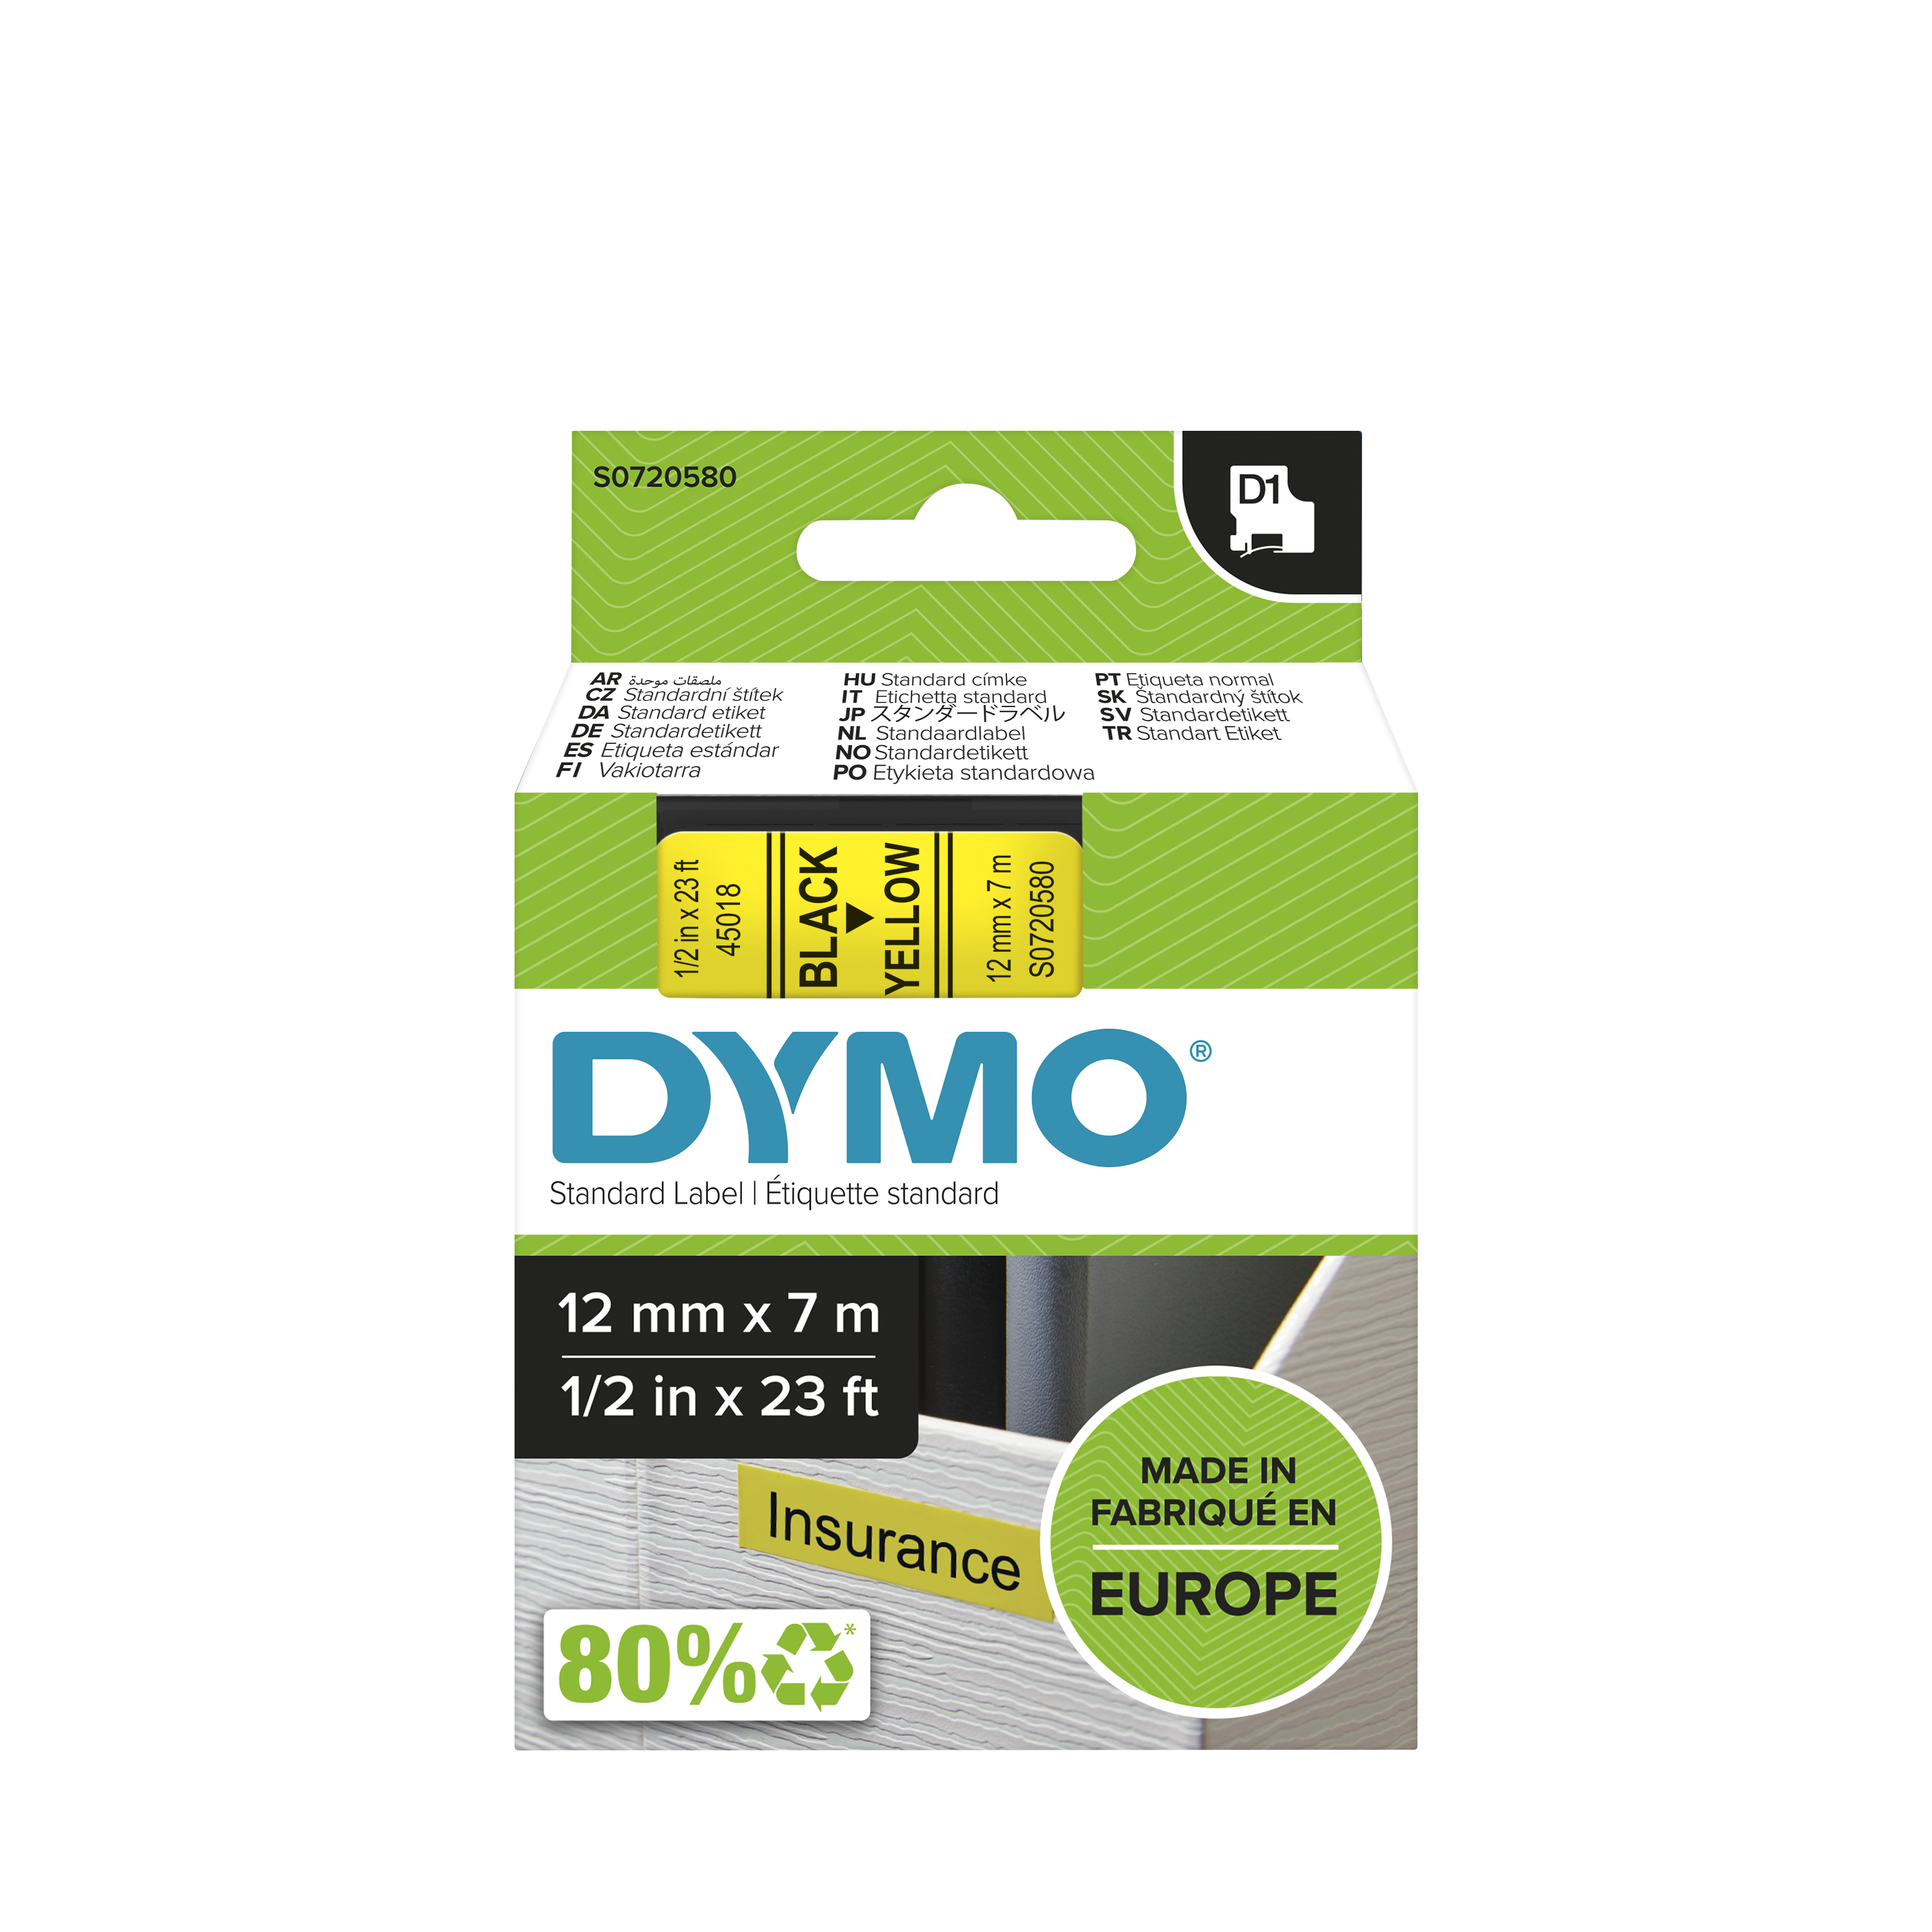 Dymo Black on Yellow Label Printer Tape, 7 m Length, 12 mm Width